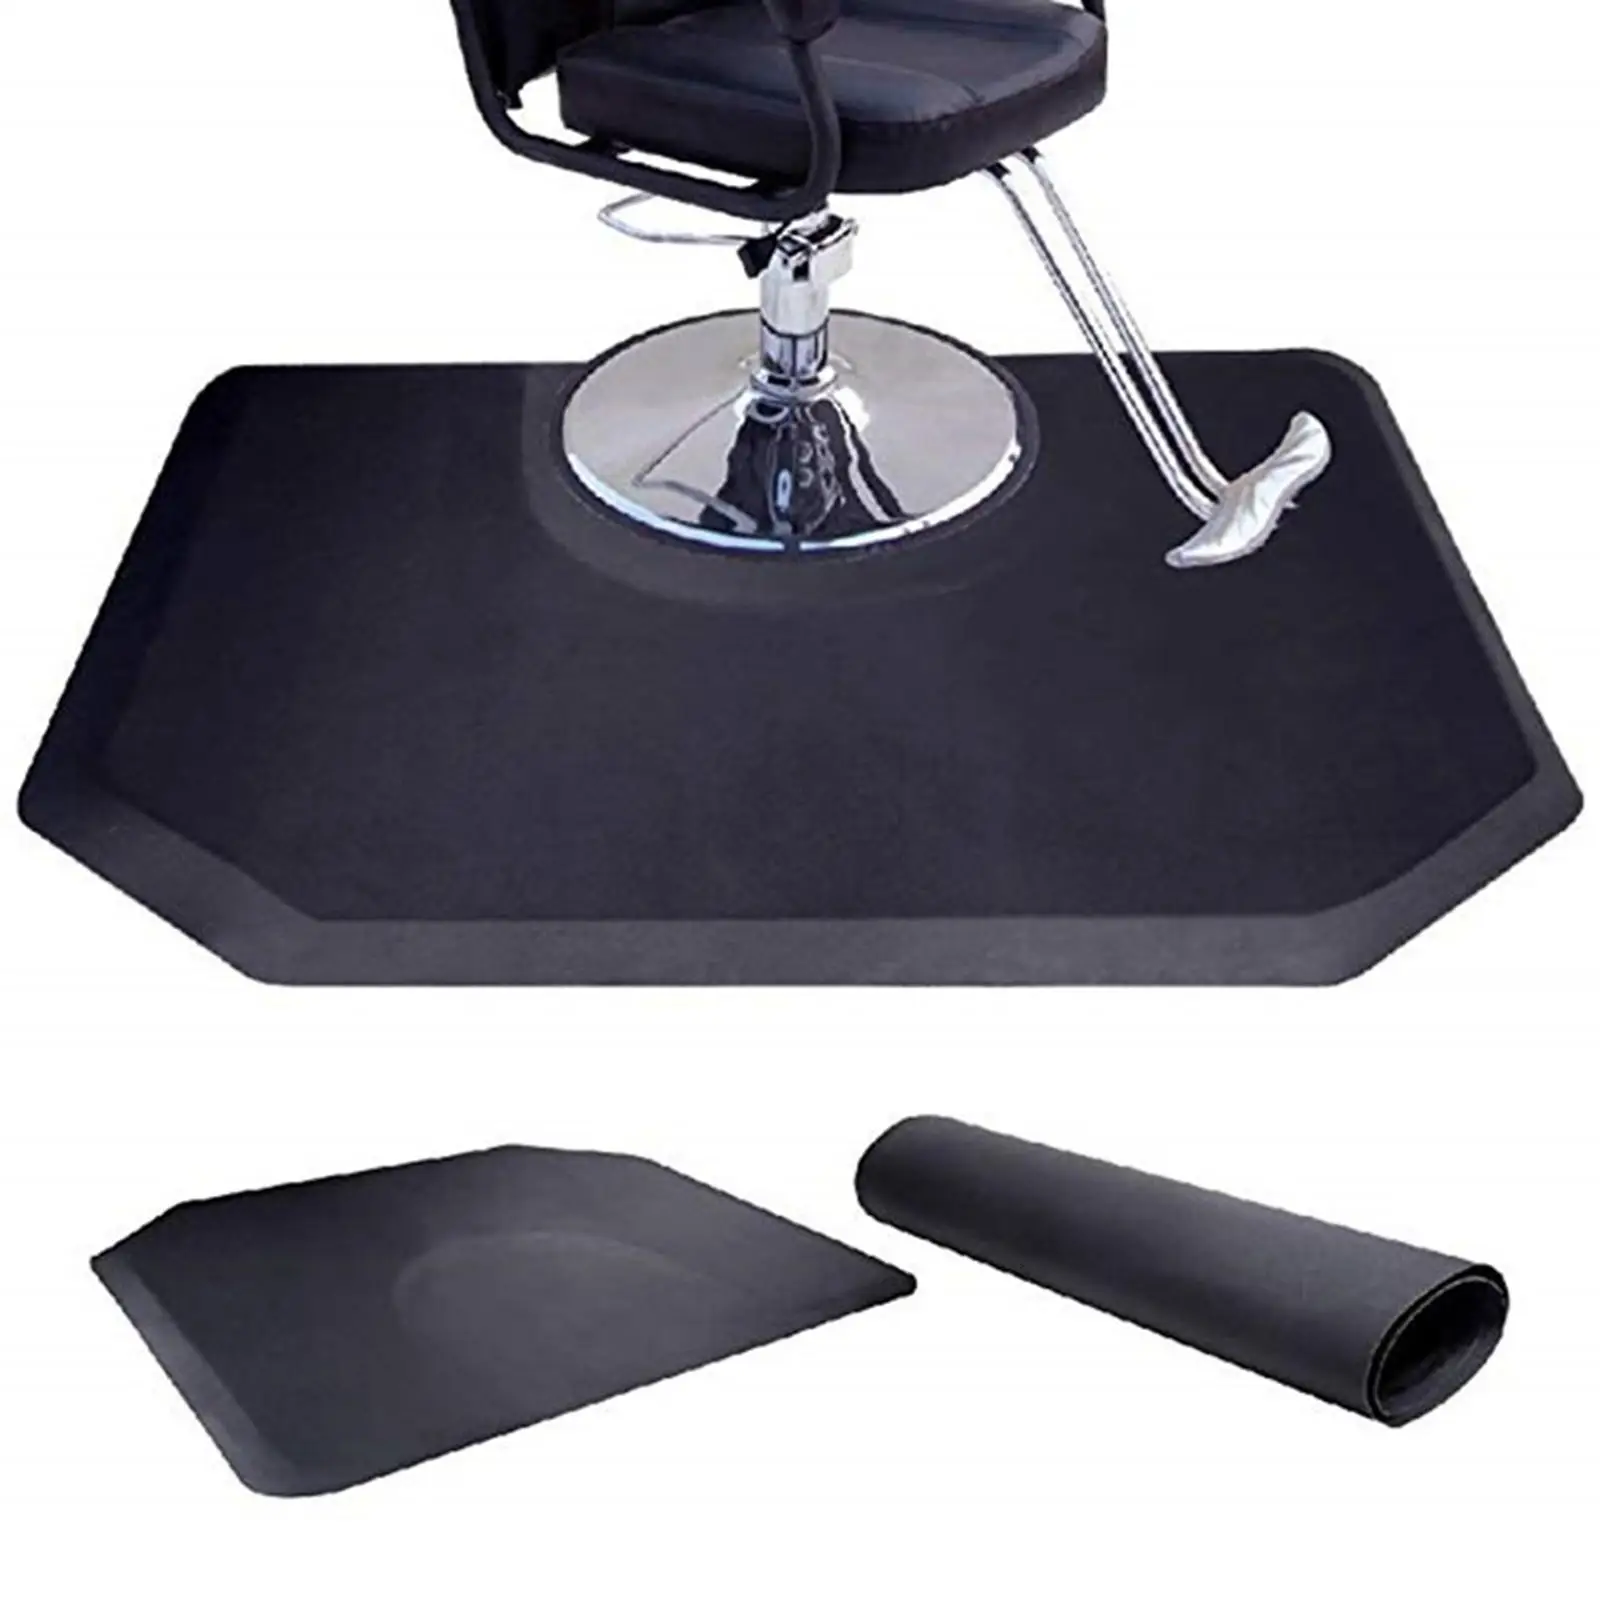 Barber Anti Fatigue Floor Mat Waterproof Non Slip Beauty Floor Mat Soft Sponge Chair Cushion for Hair Stylist Barber Shop Office